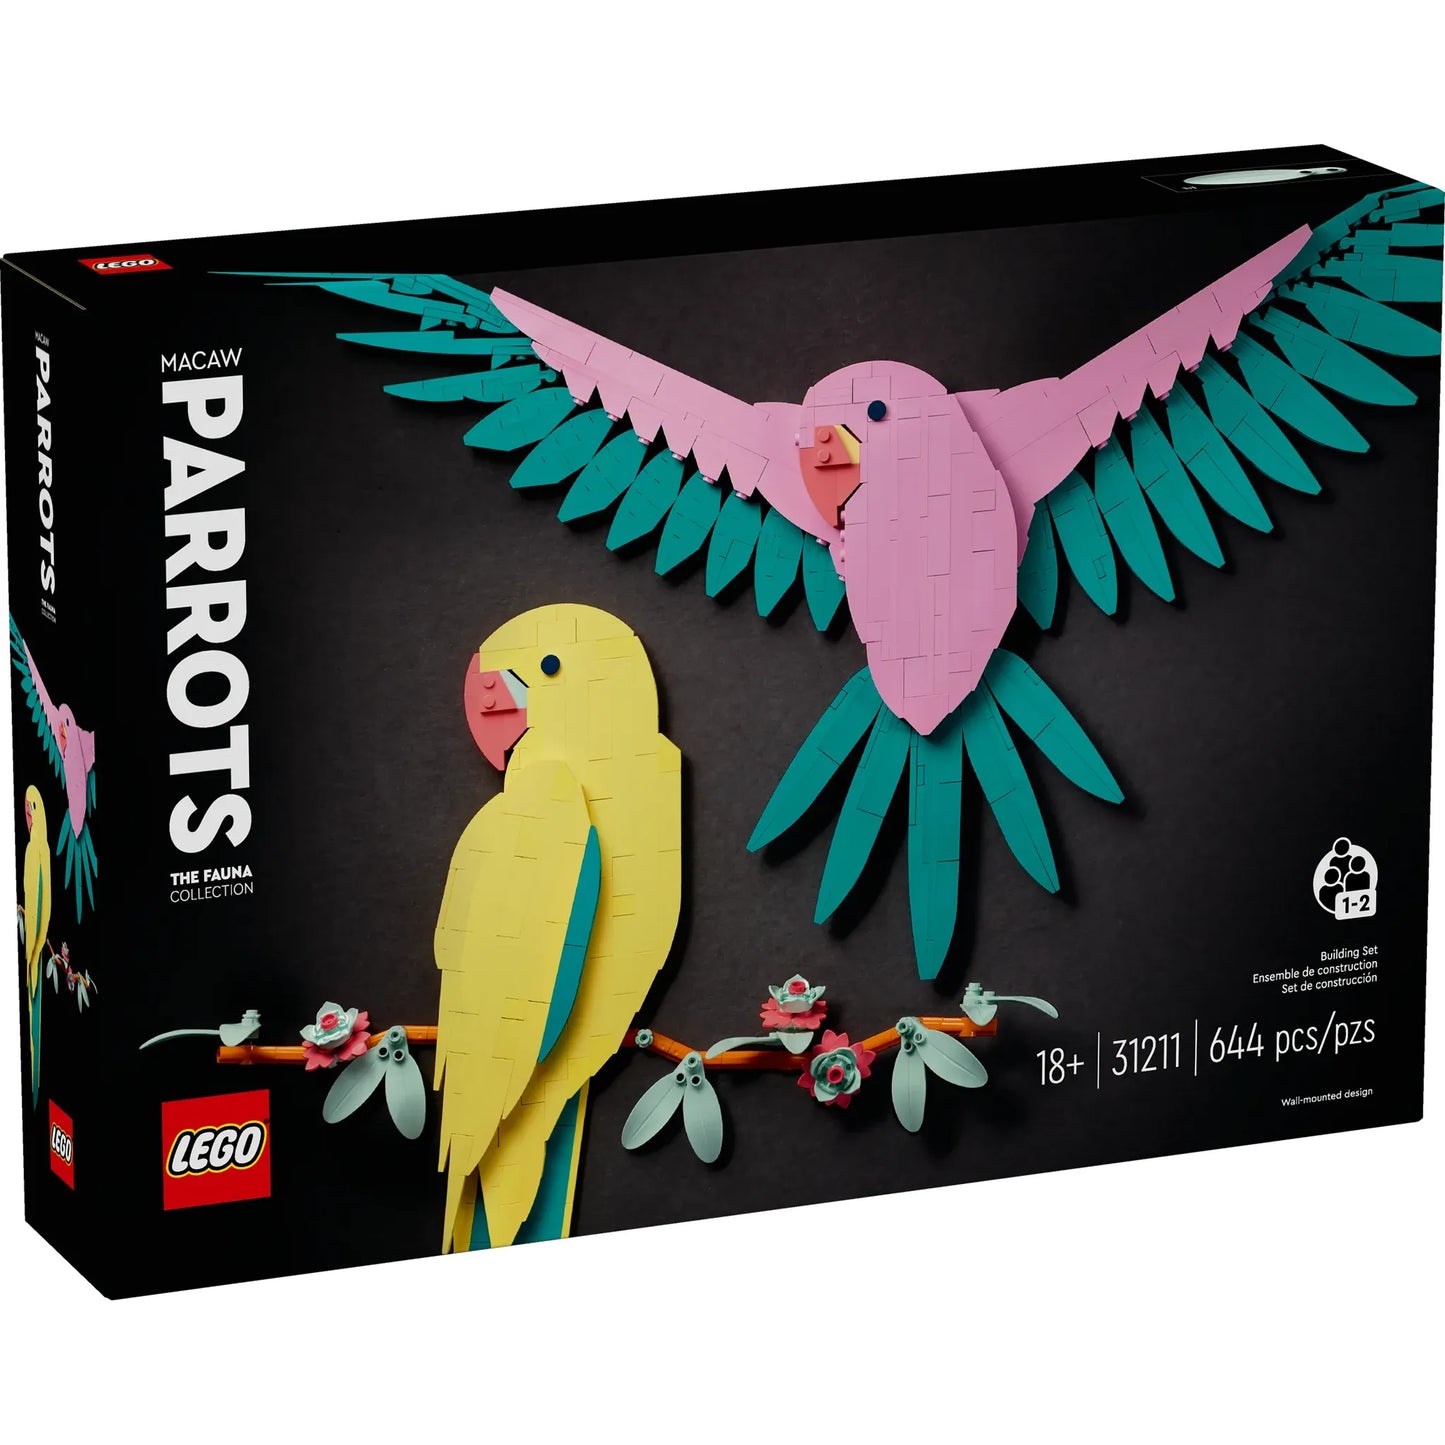 Fauna Collection: Macaw Parrots Building Set